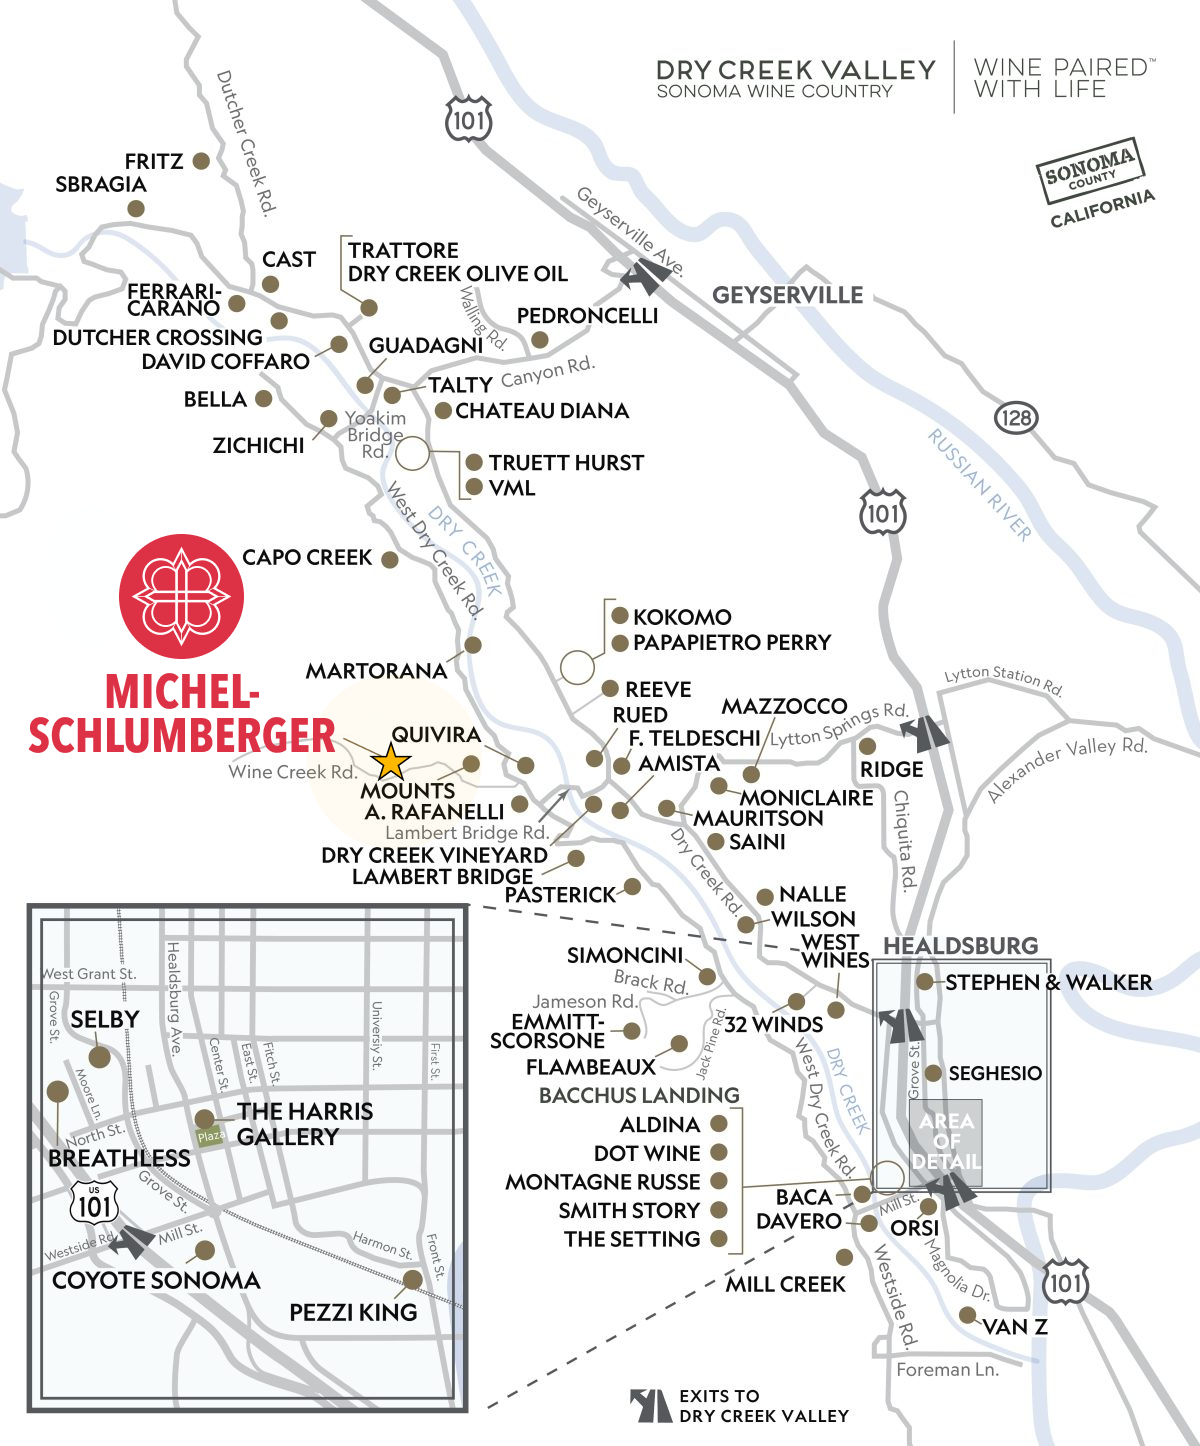 Michel-Schlumberger Wine Estate on Passport to Dry Creek Valley map